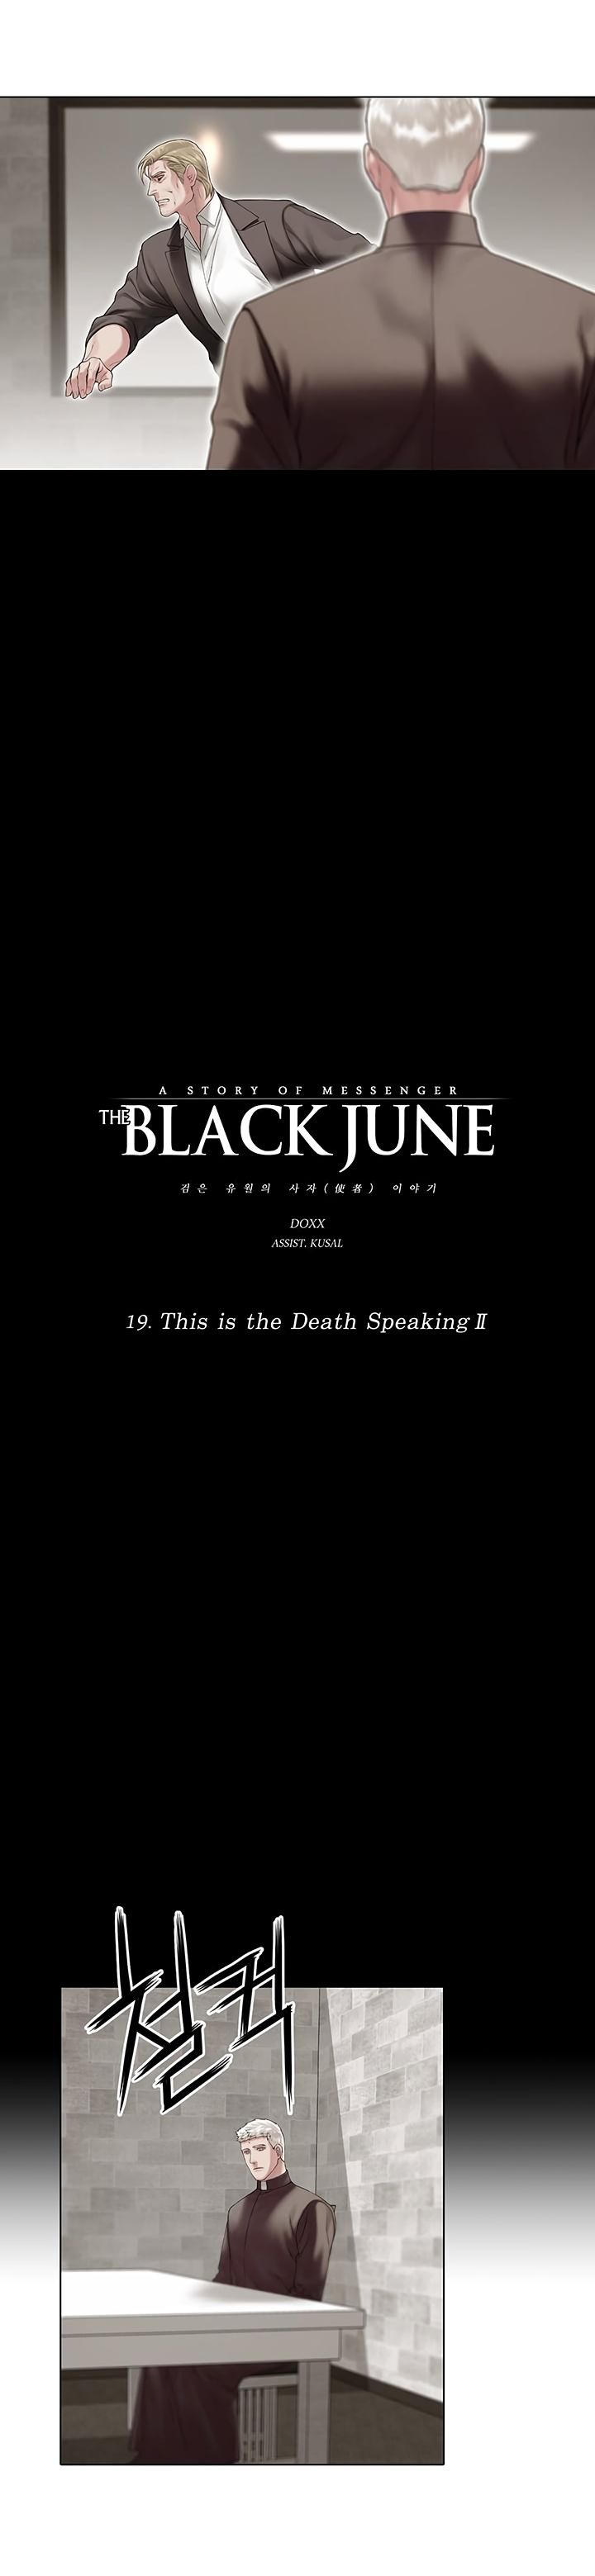 The Black June 19 6